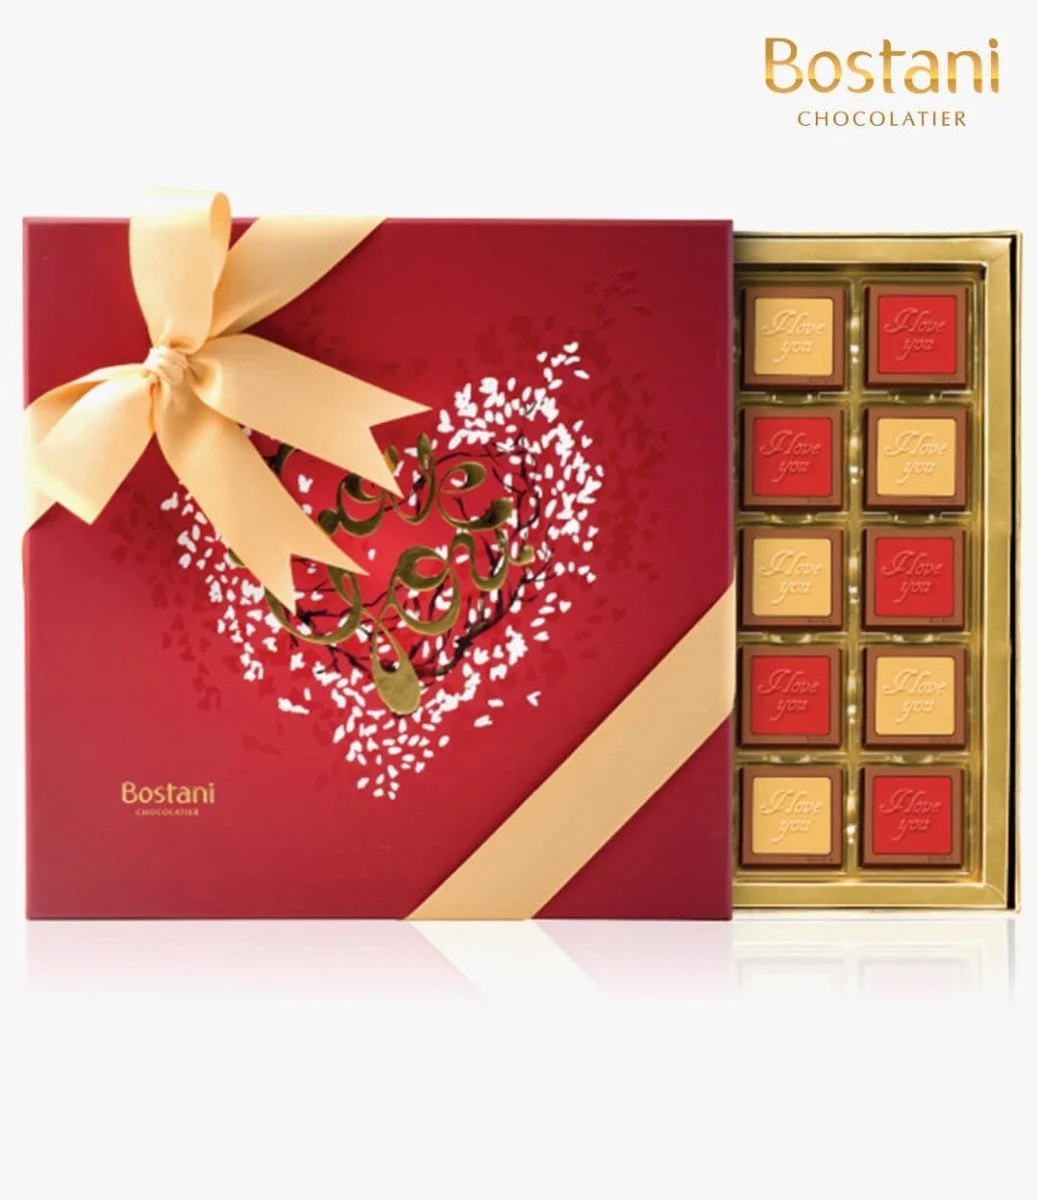 I Love You Chocolate Box 50 Pcs by Bostani